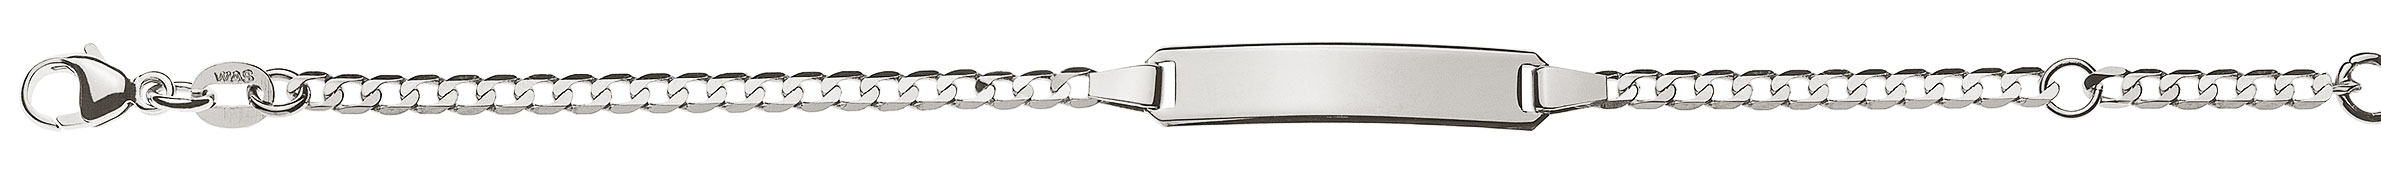 AURONOS Prestige ID-Bracelet en or blanc 18k Chaîne blindée diamantée 18cm